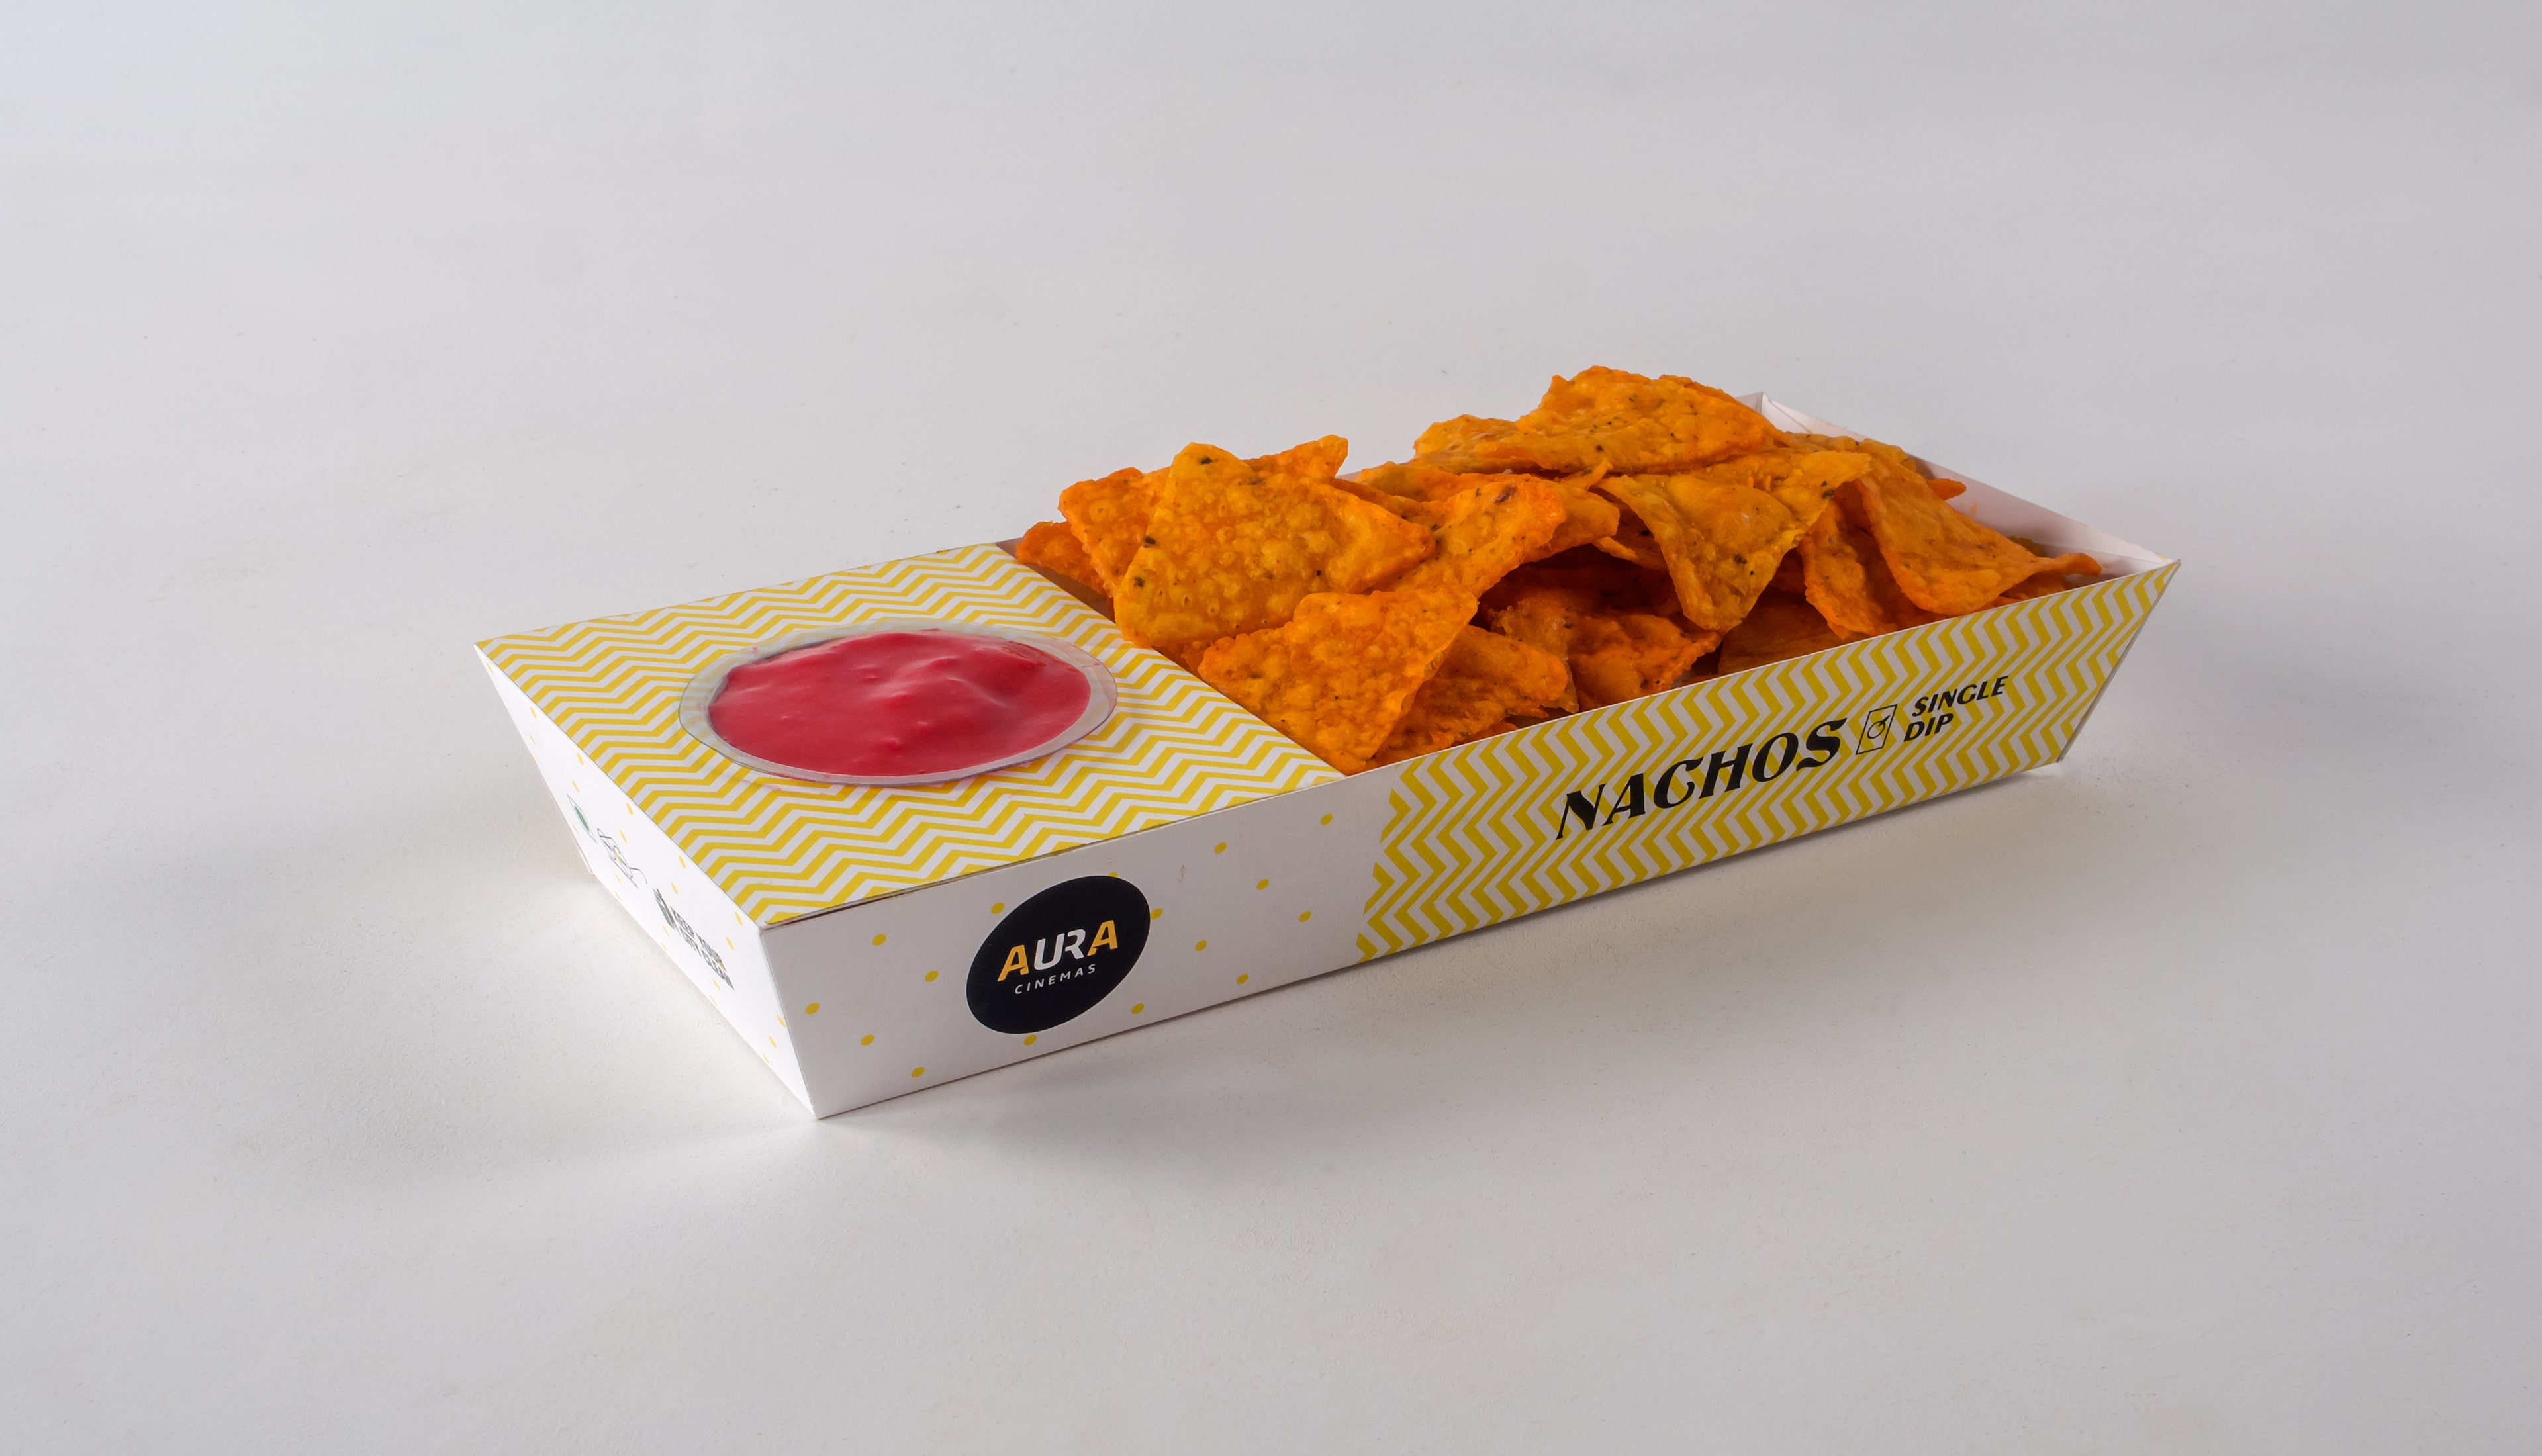 Nachos packaging design for Aura cinemas